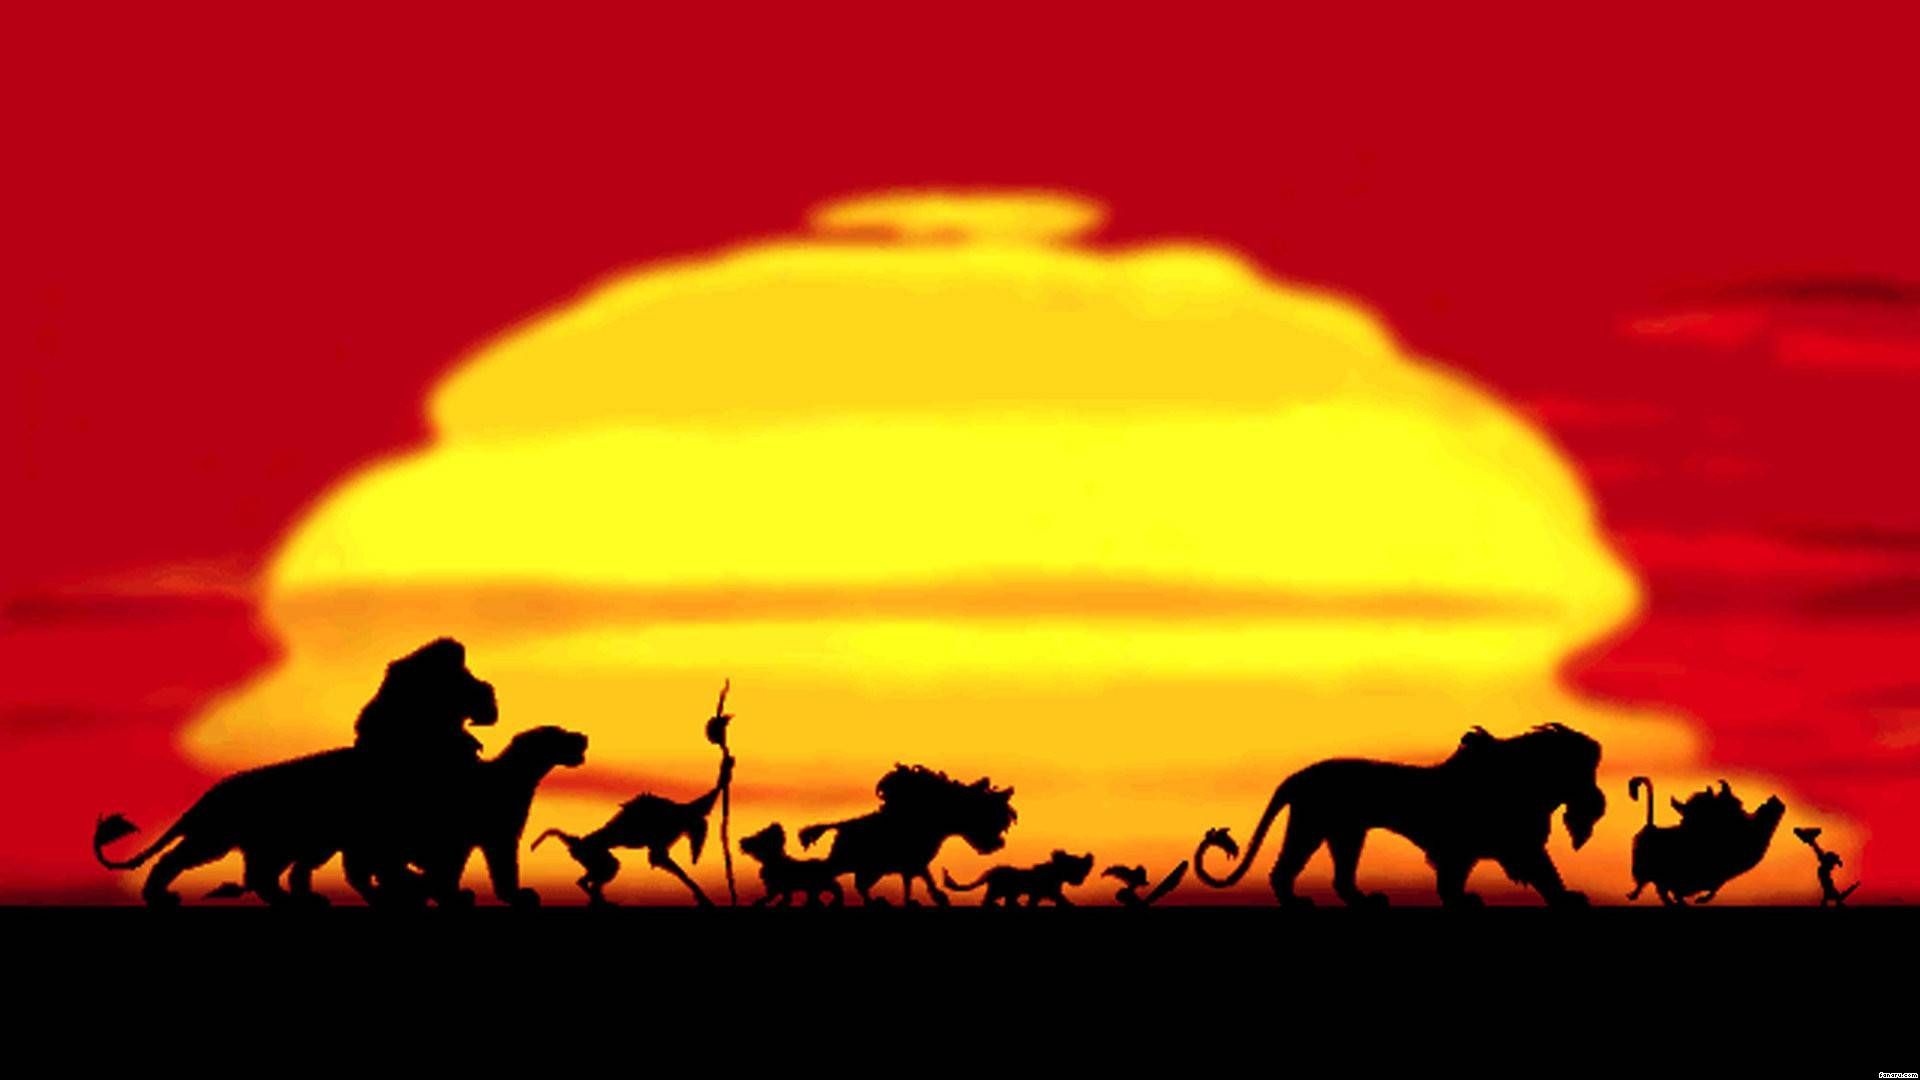 Lion King Silhouette Sunset